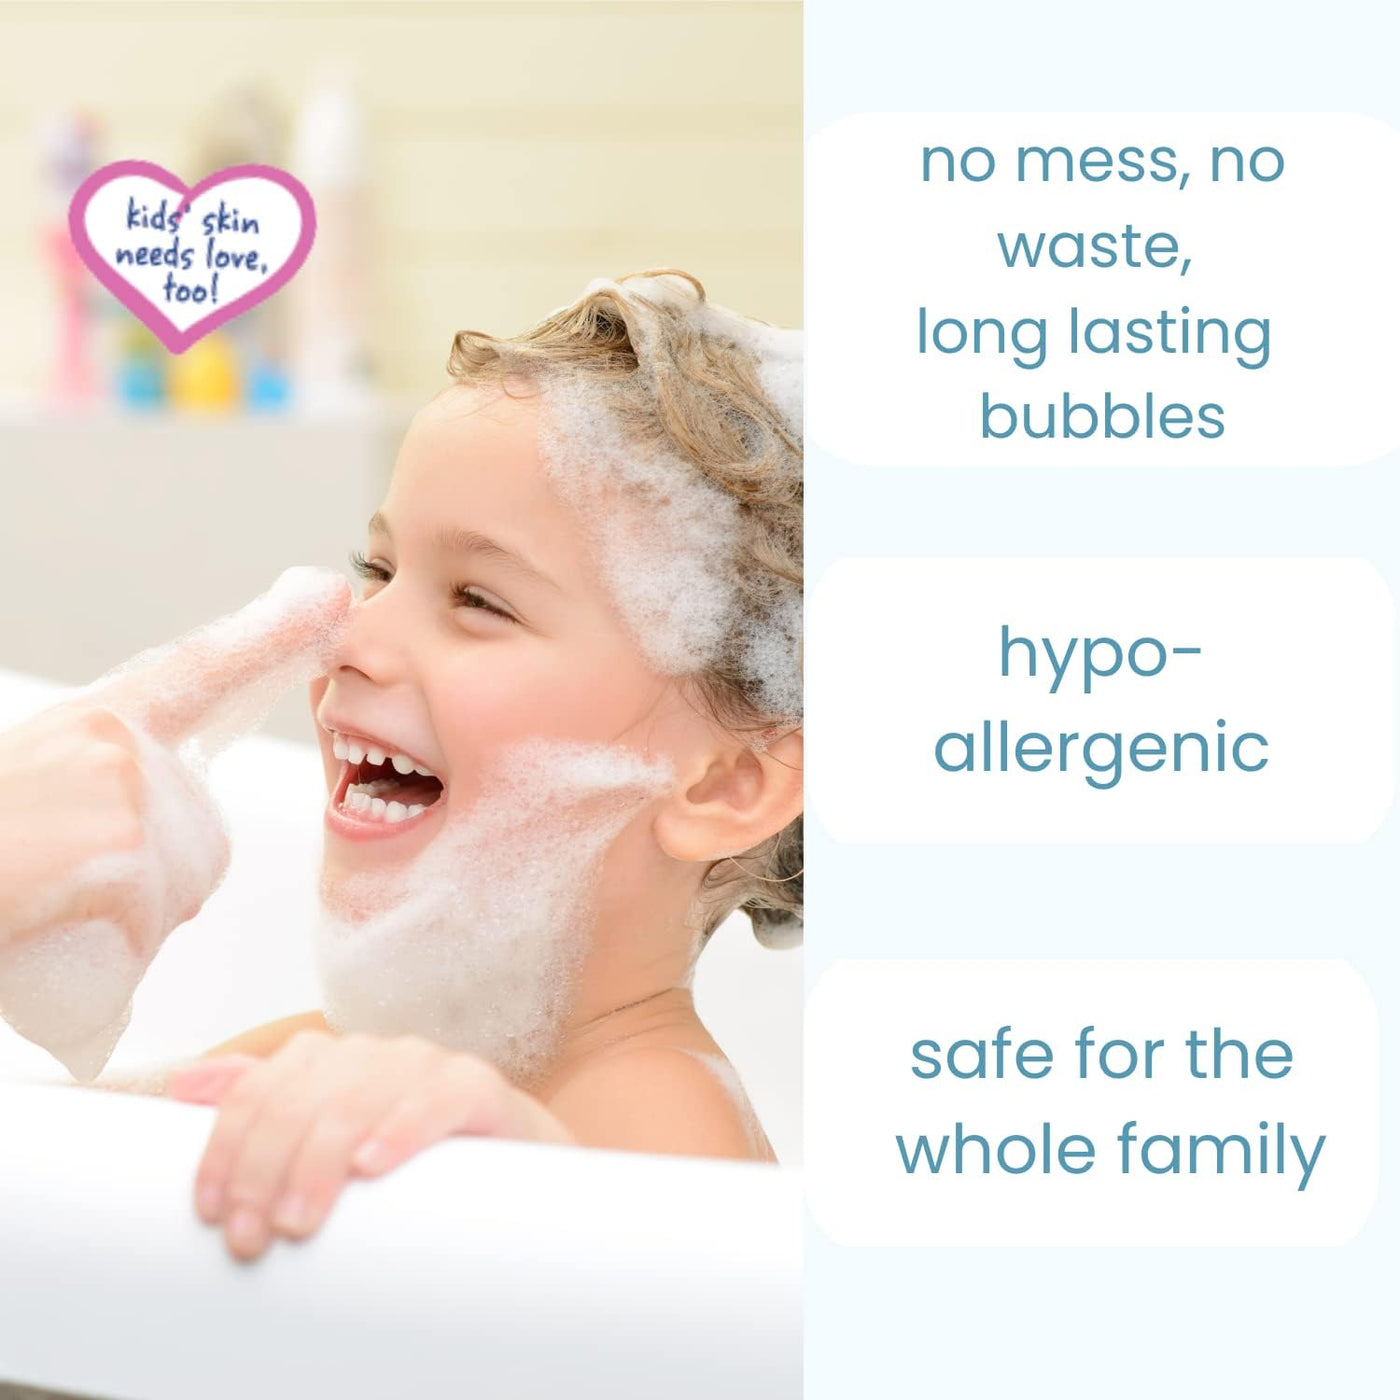 TruKid Bubble Podz: Bubble Gum Scented Bubble Bath